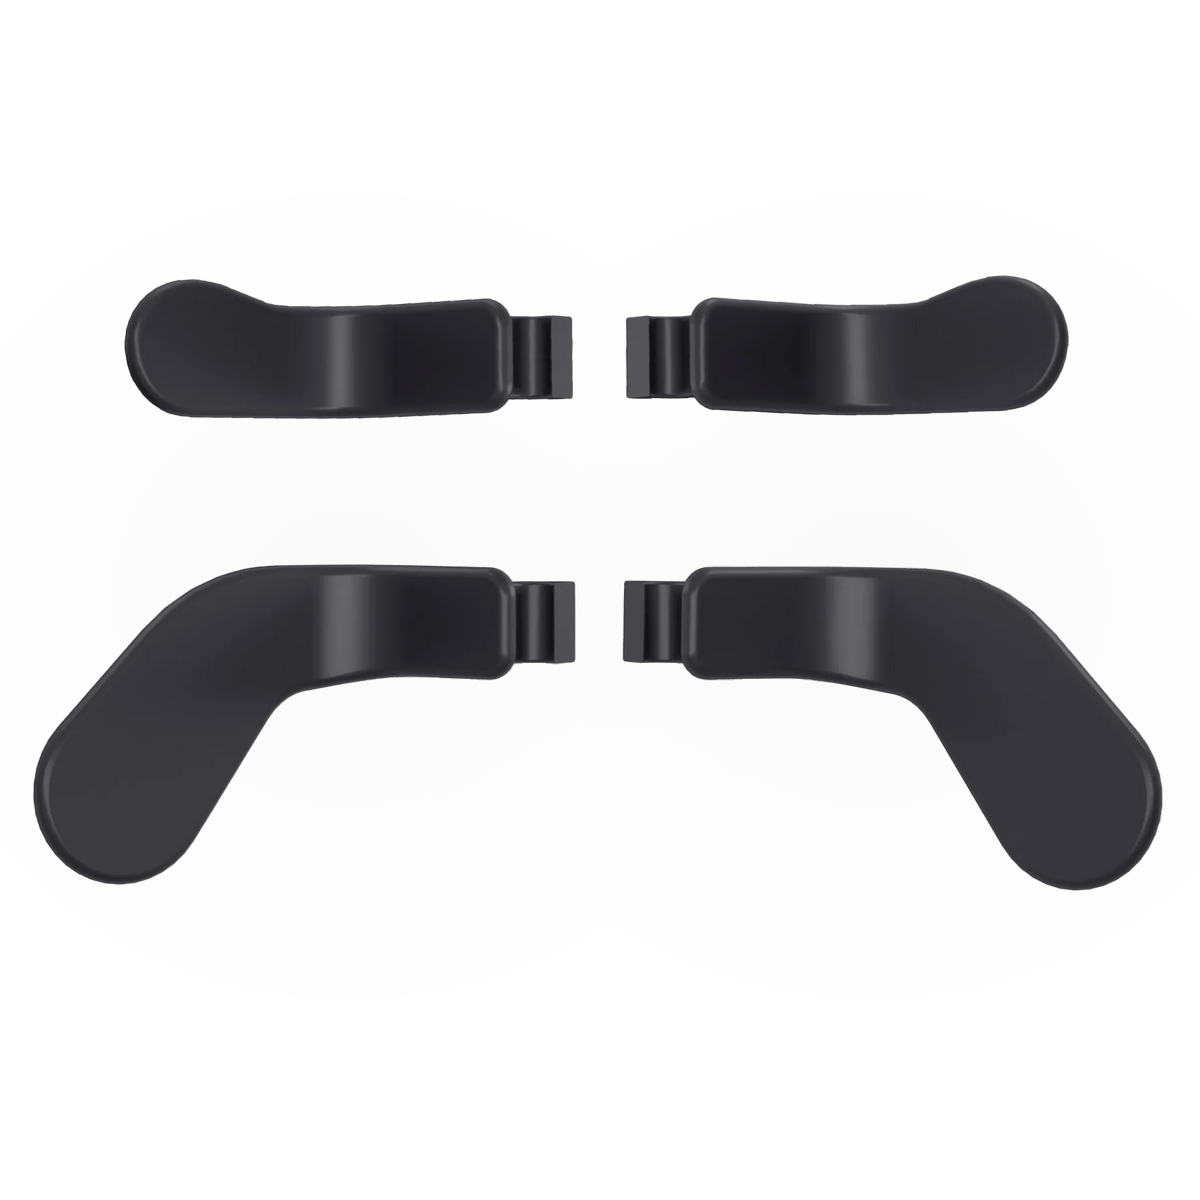 Xbox Elite Wireless Controller Series 2 - Black Paddles Pack